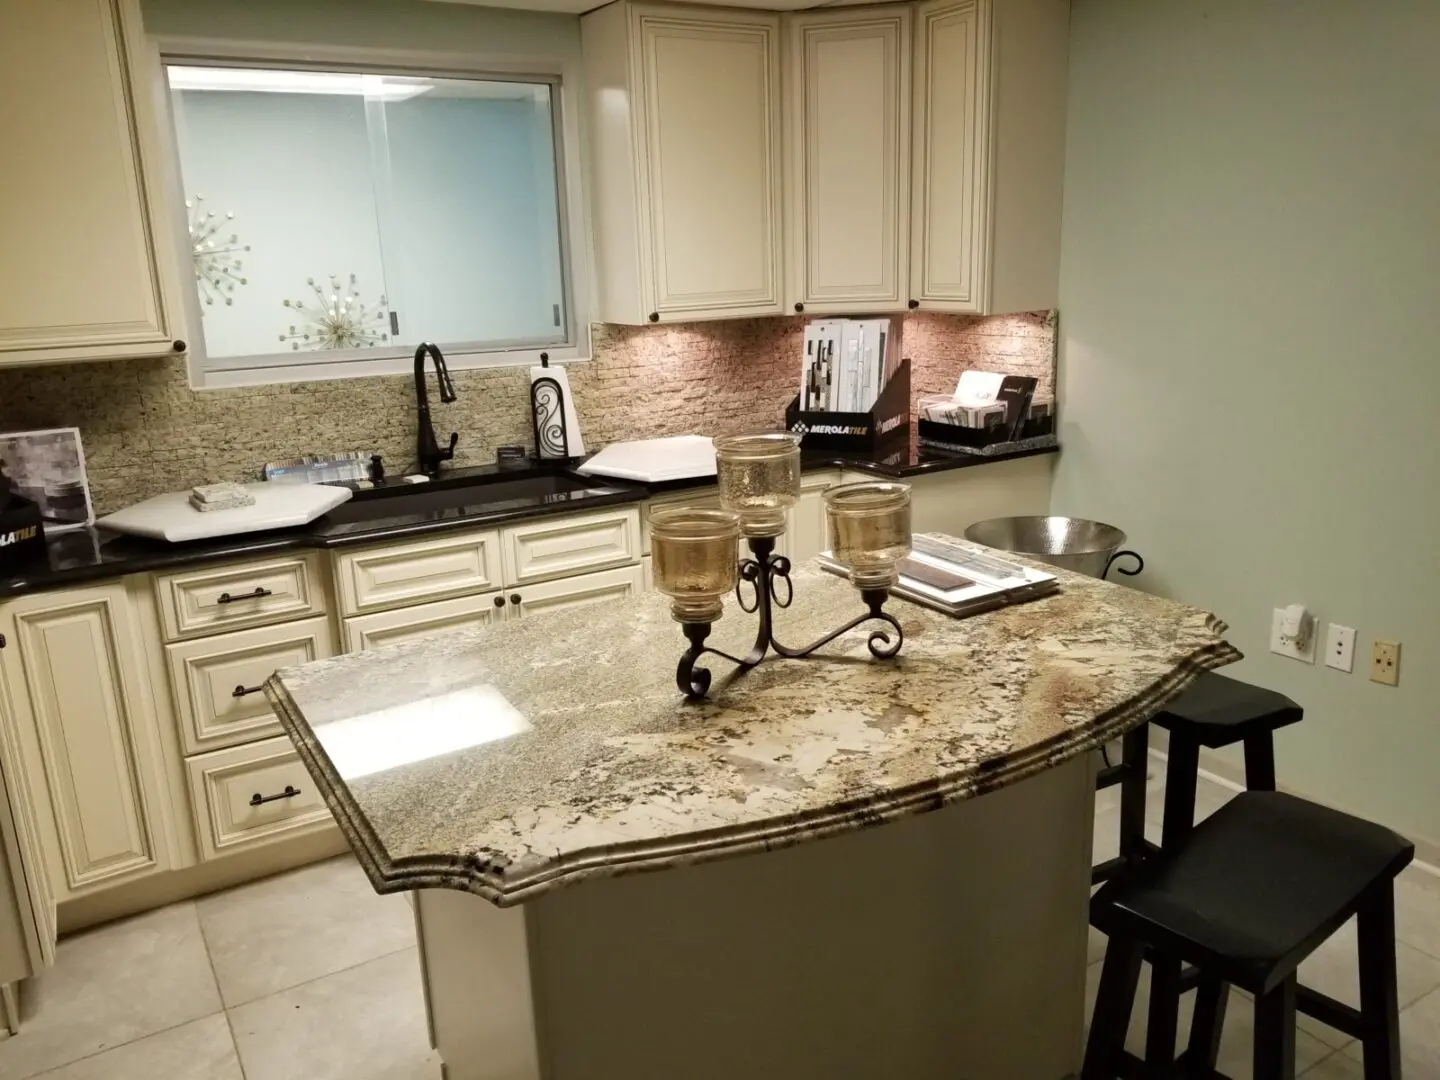 Modern kitchen interior with granite countertops and cream-colored cabinets.